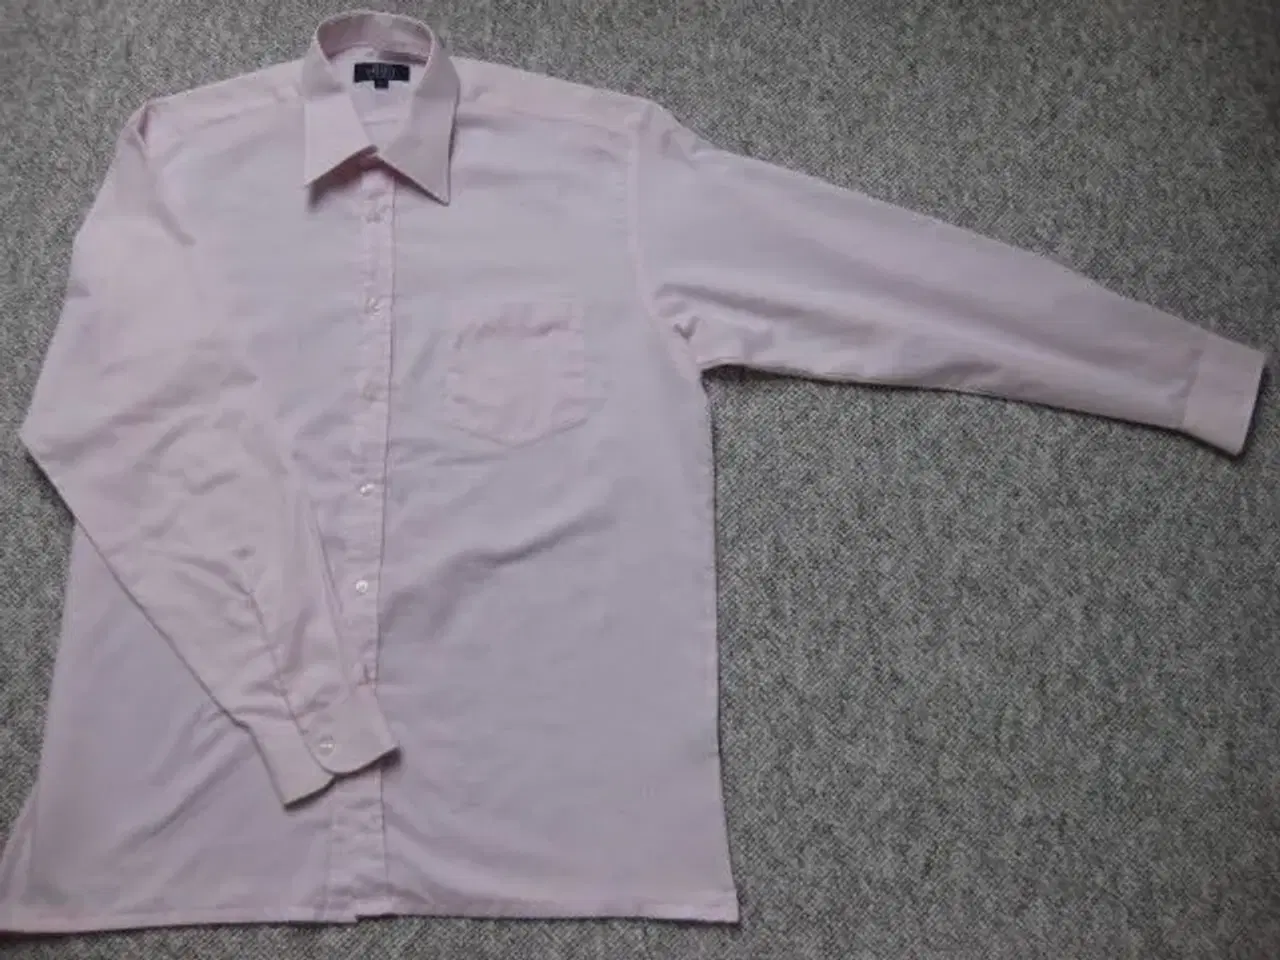 Billede 1 - Str. L, lyserød/hvid skjorte